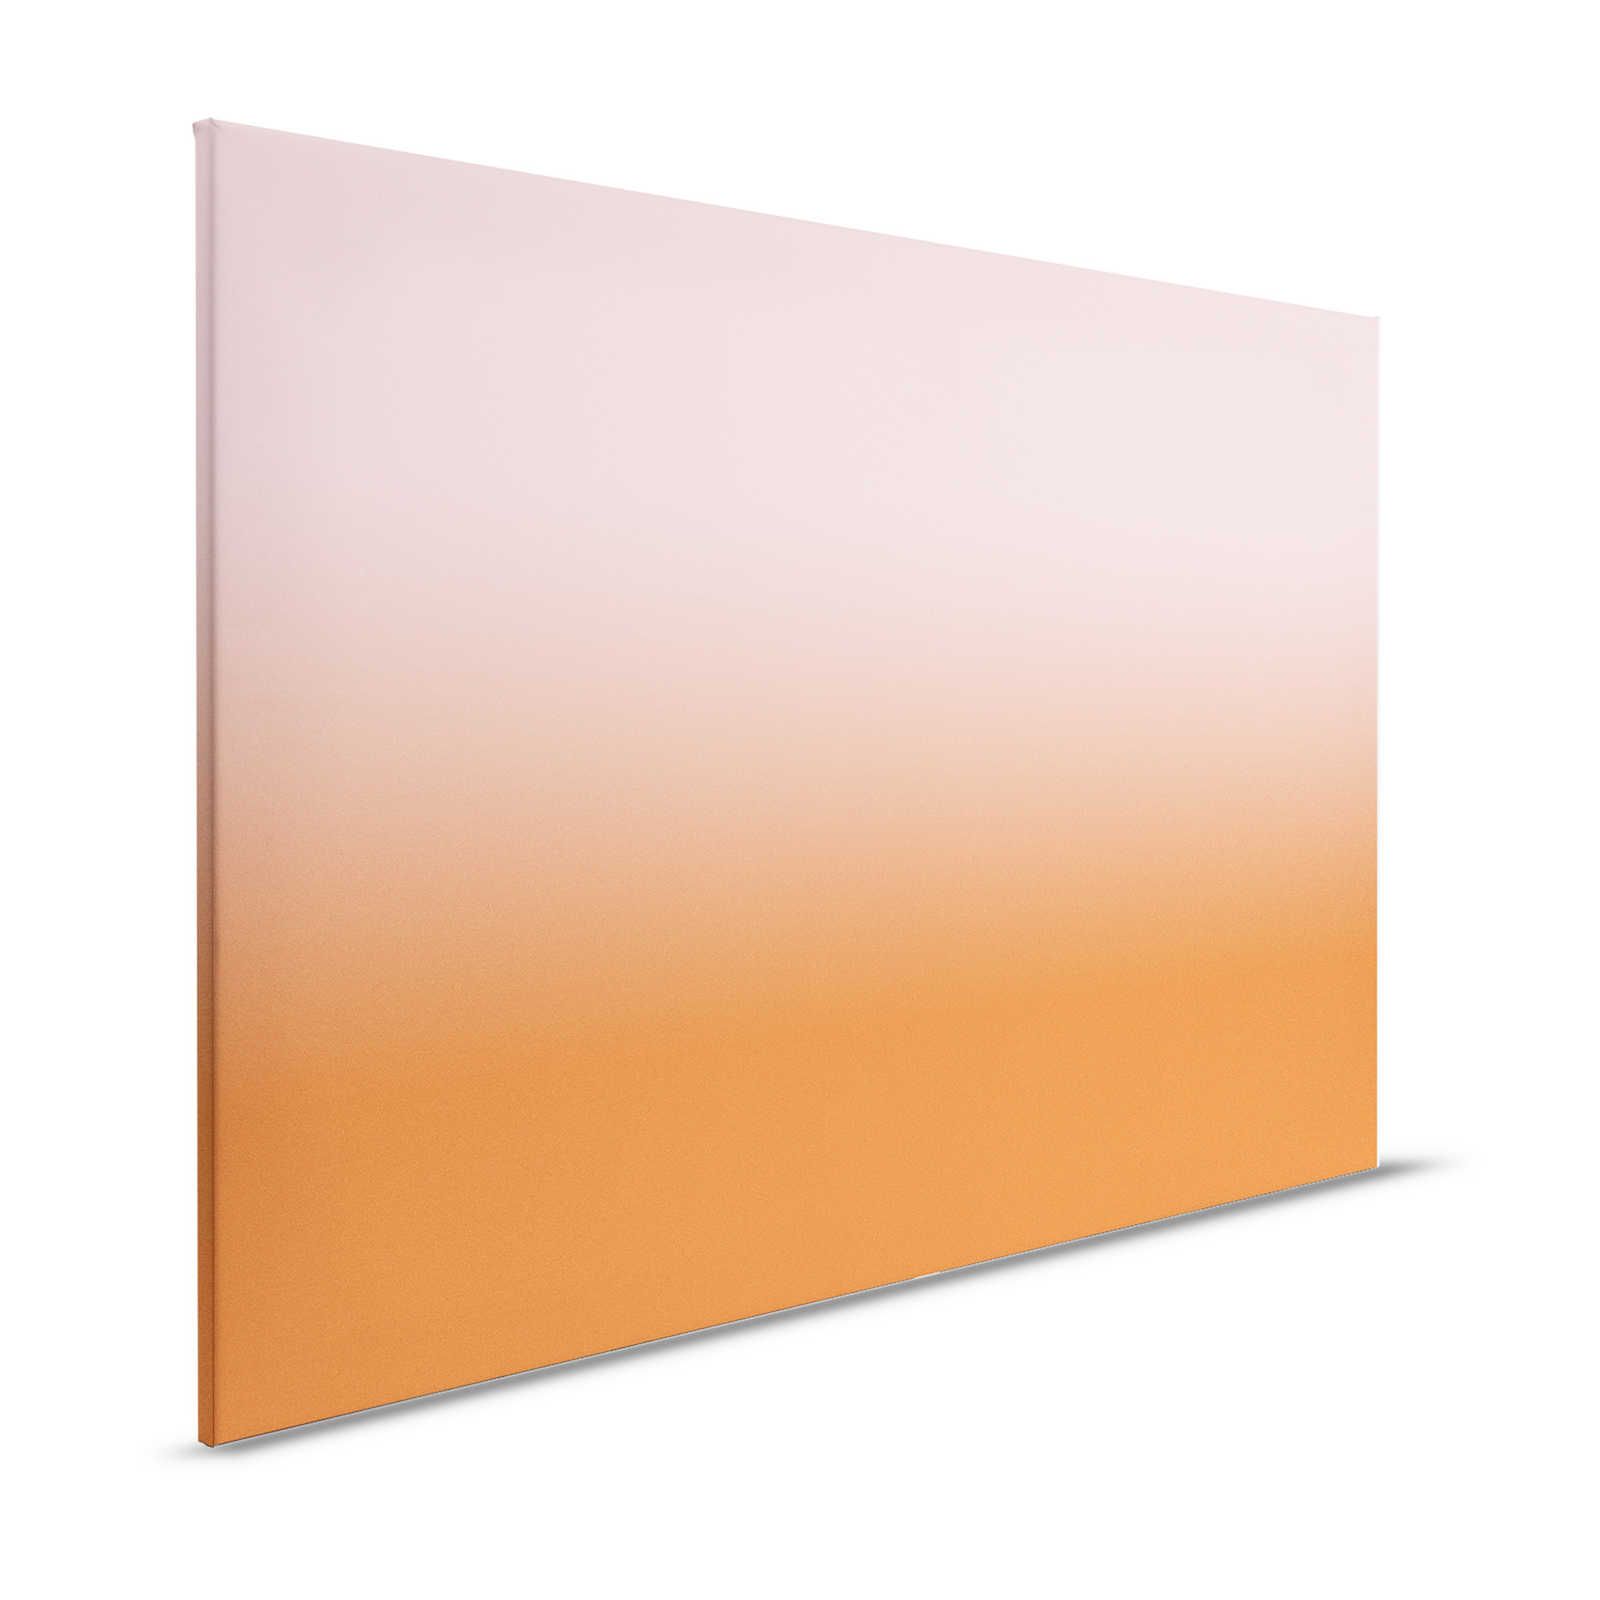             Colour Studio 4 - Lienzo Ombre Gradiente Rosa y Naranja - 1,20 m x 0,80 m
        